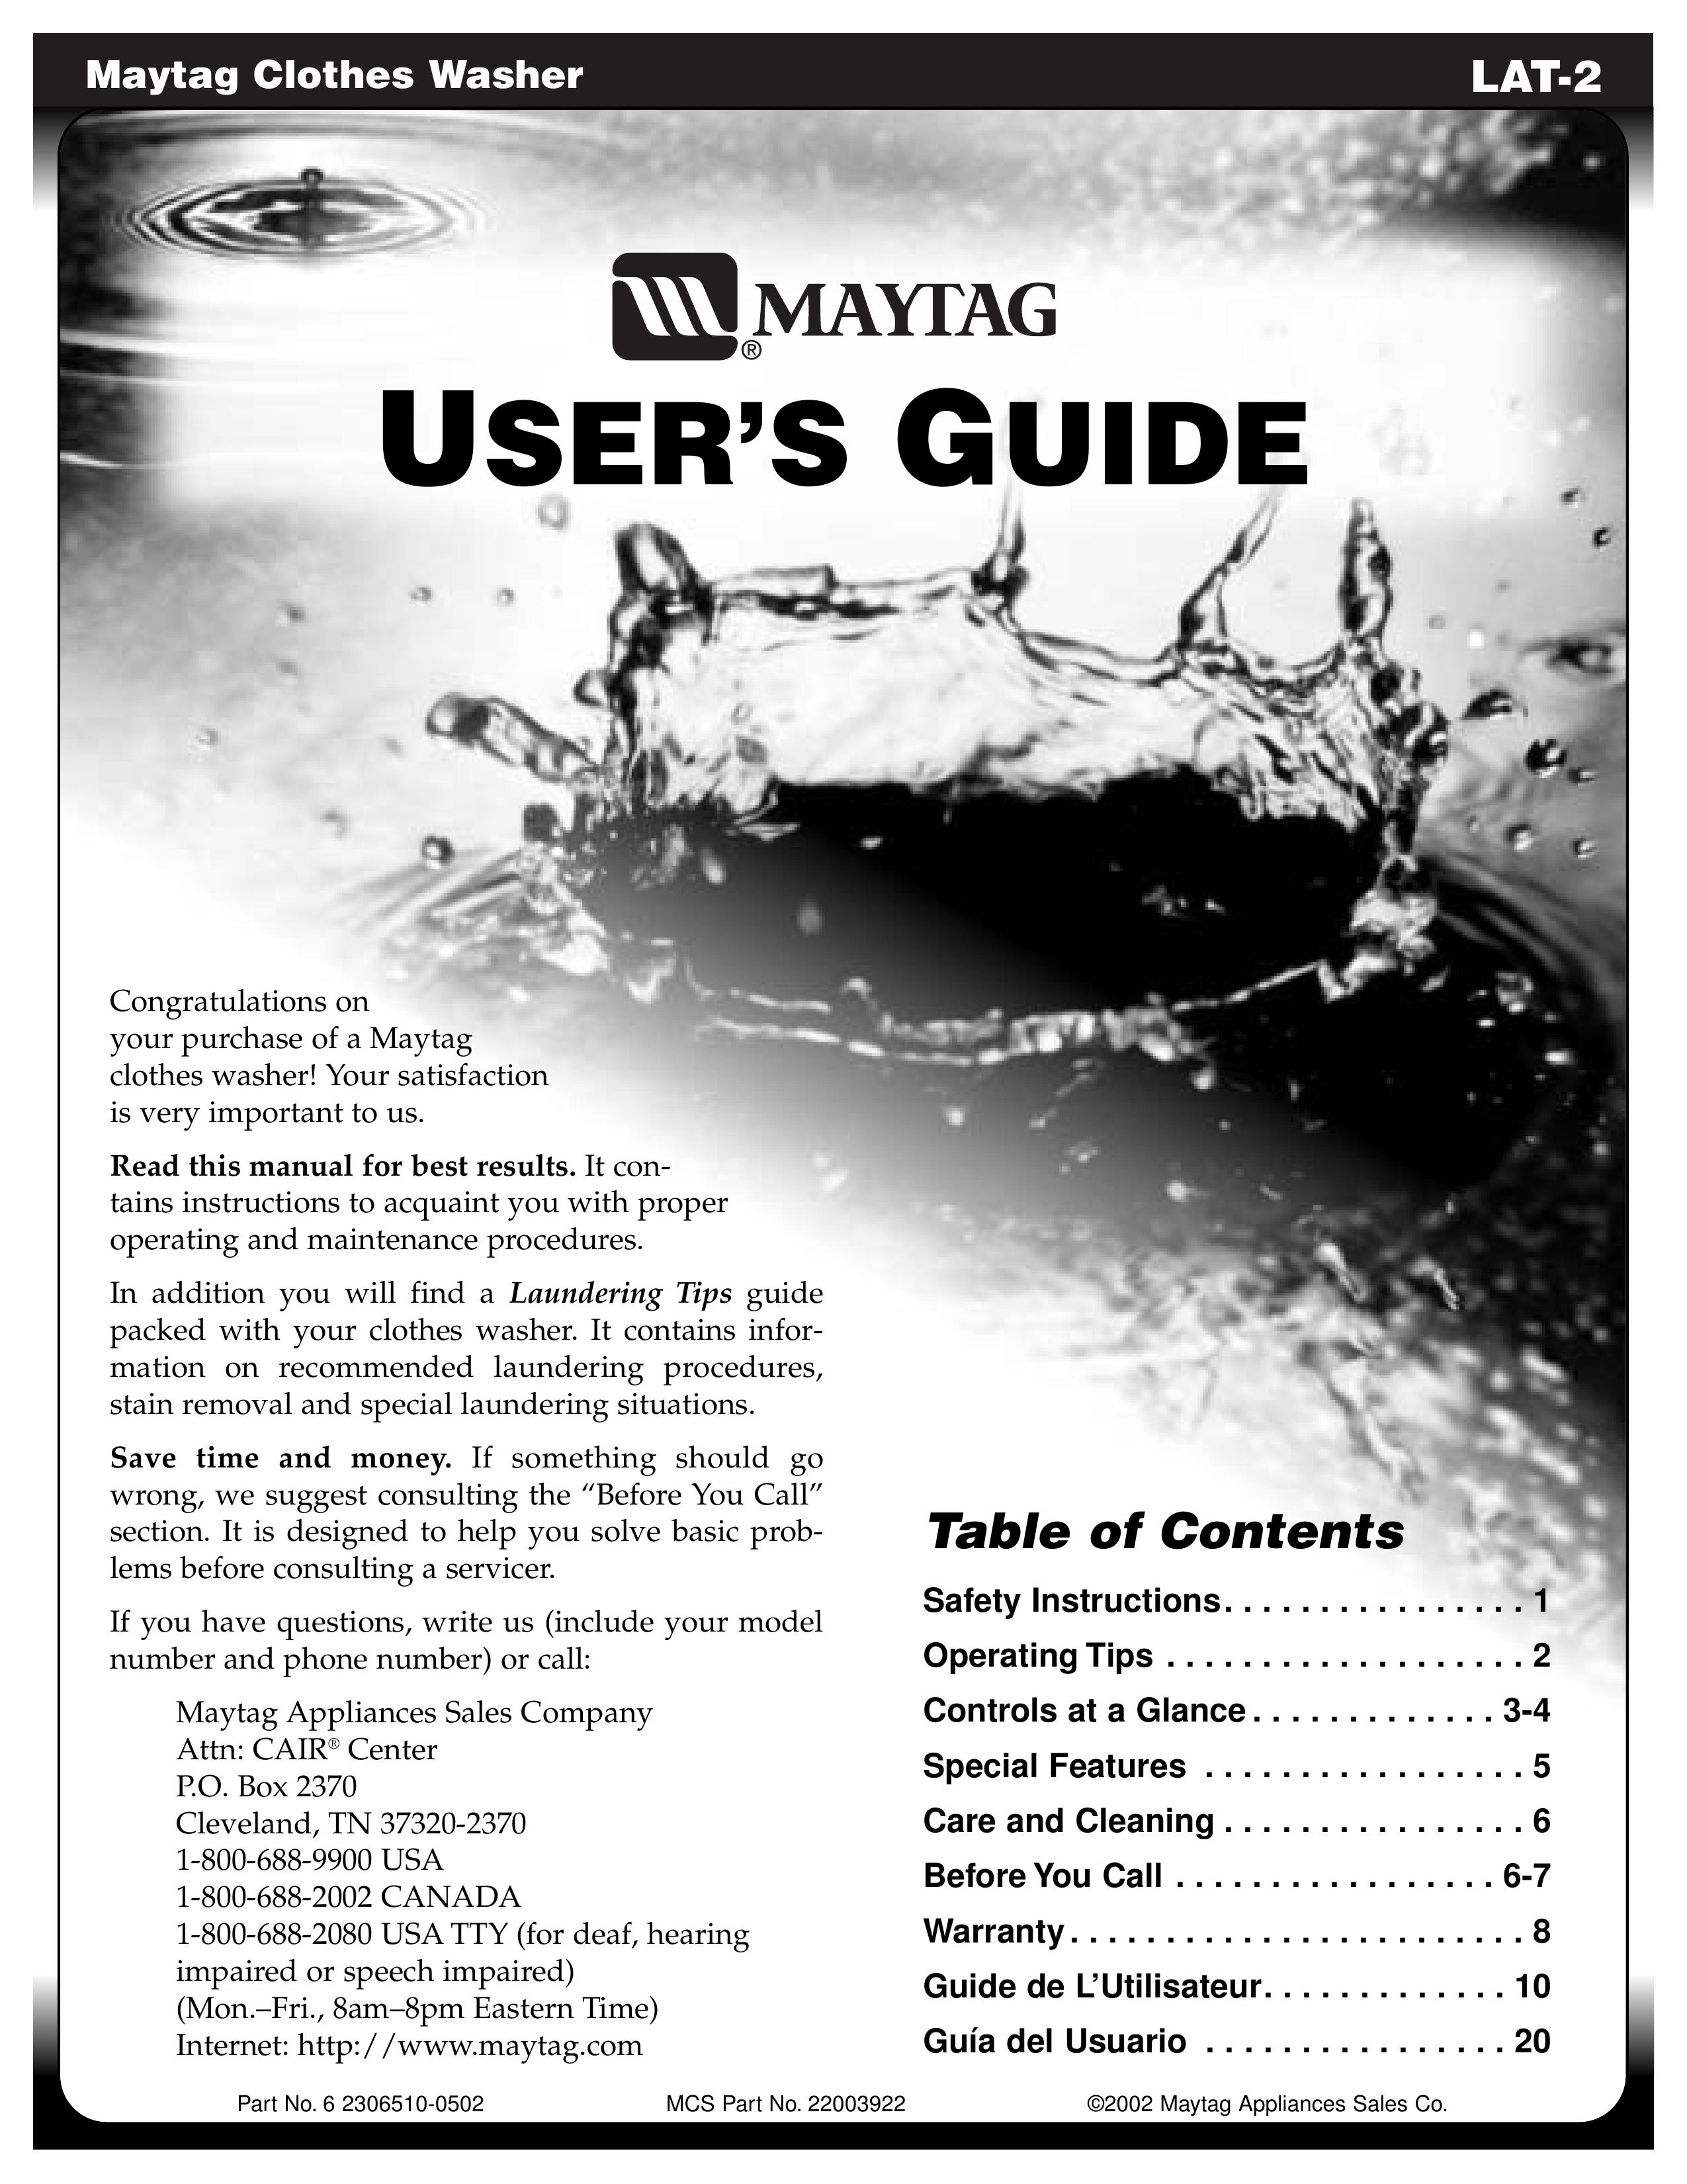 Maytag LAT-2 Washer User Manual